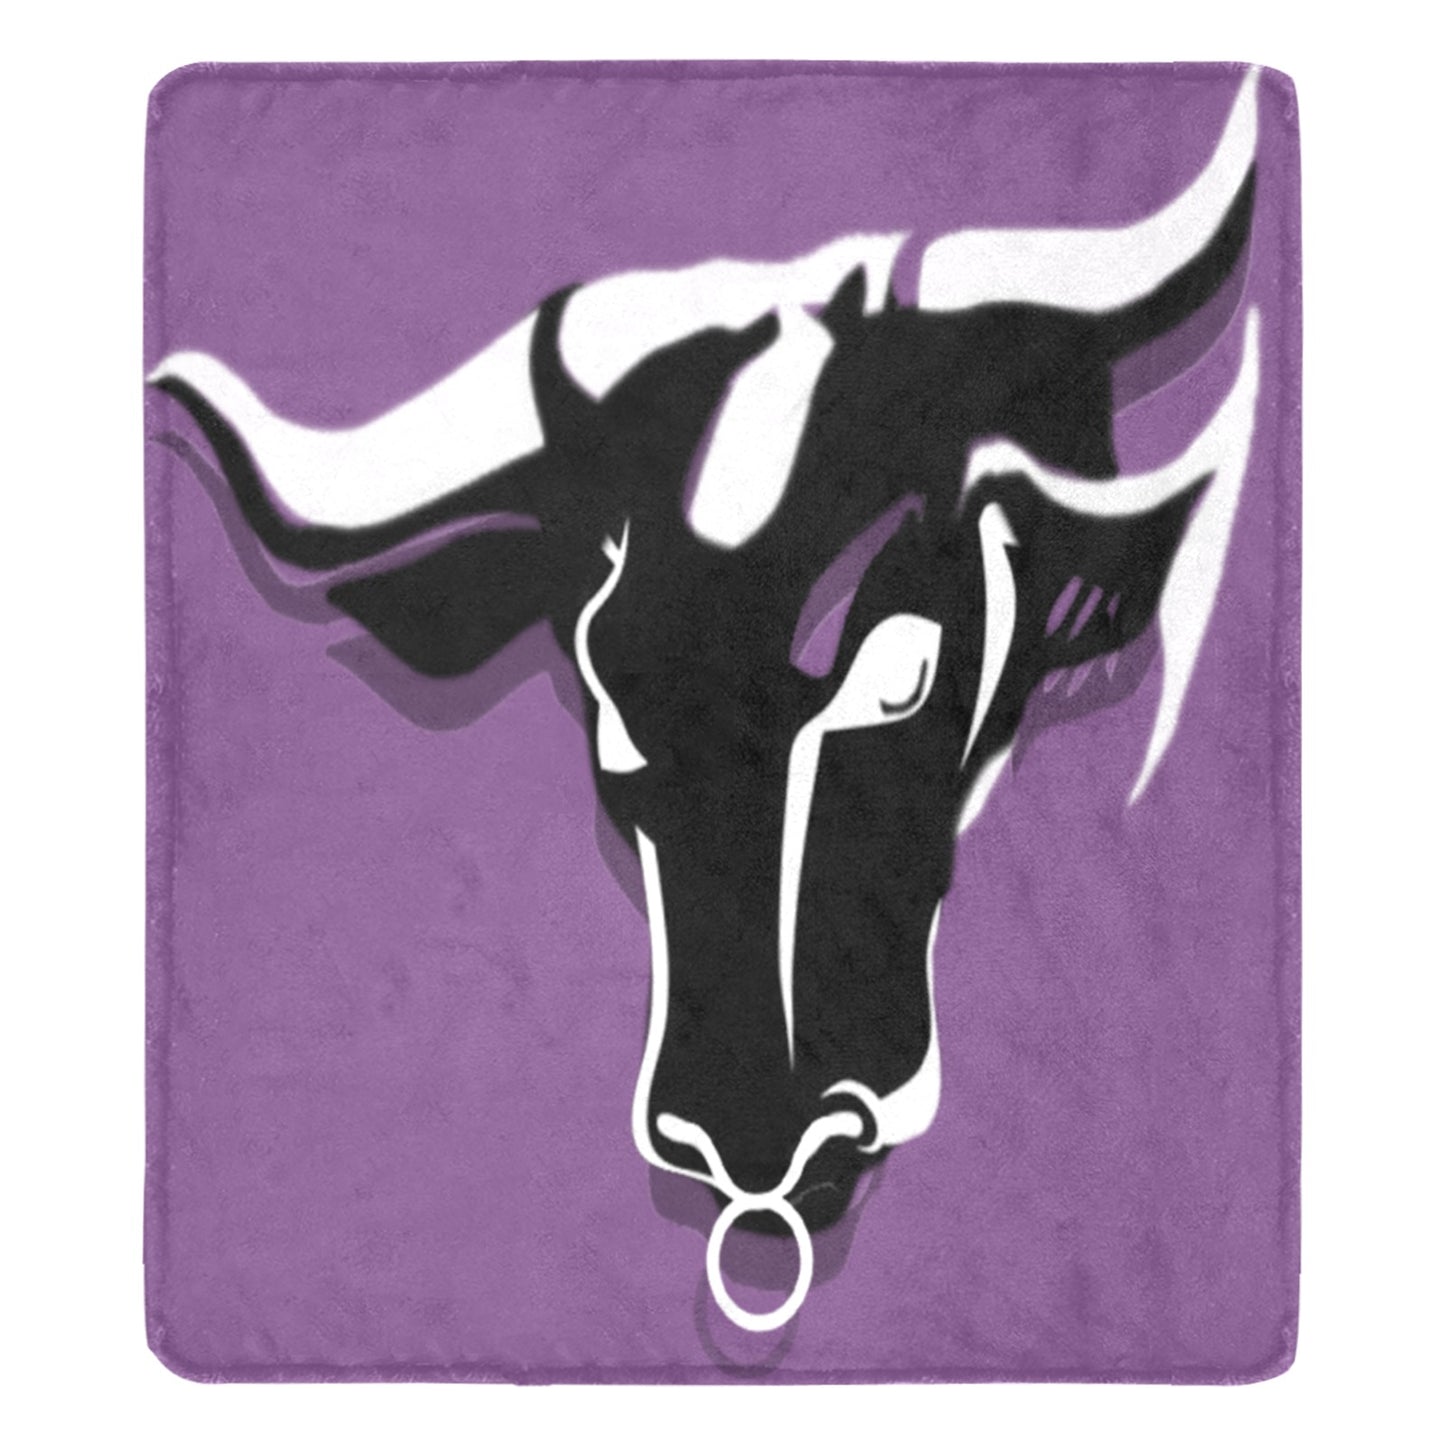 fz blanket bull (xl) one size / fz blanket - purple ultra-soft micro fleece blanket 70"x80"